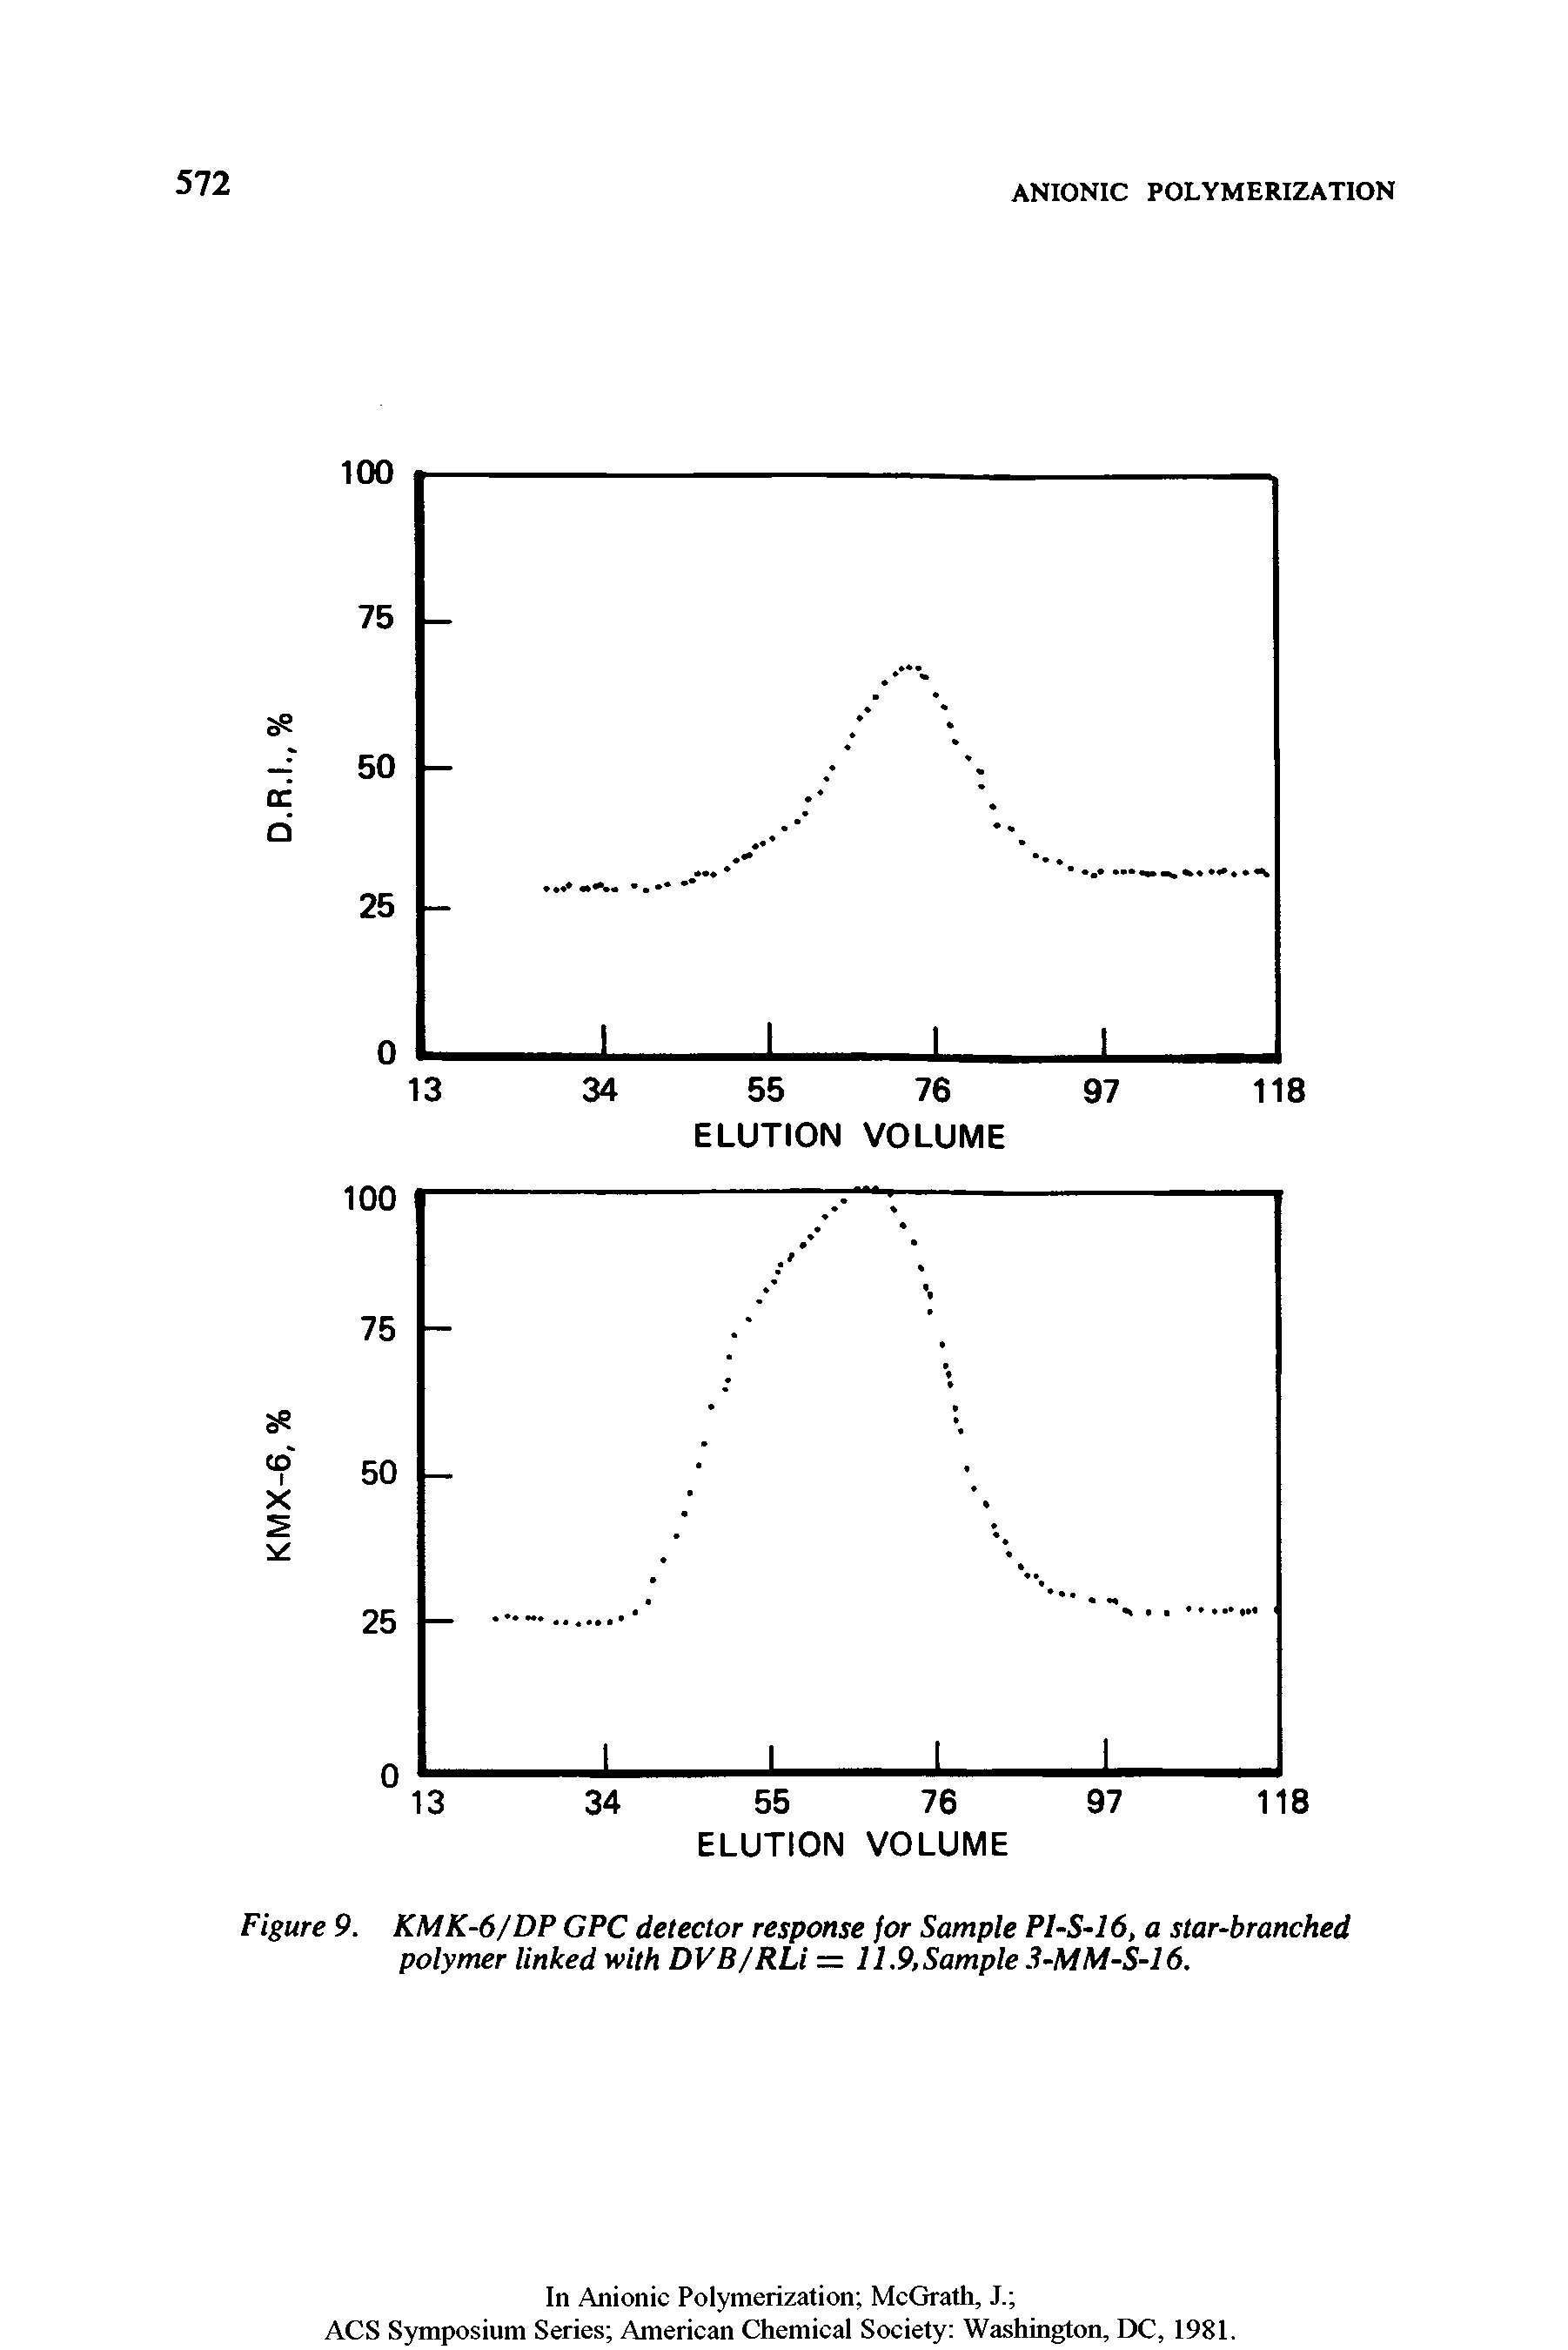 Figure 9. KMK-6/DP GPC detector response for Sample PI-S-16, a star-branched polymer linked with DVB/RLi = 11.9, Sample 3-MM-S-l 6.